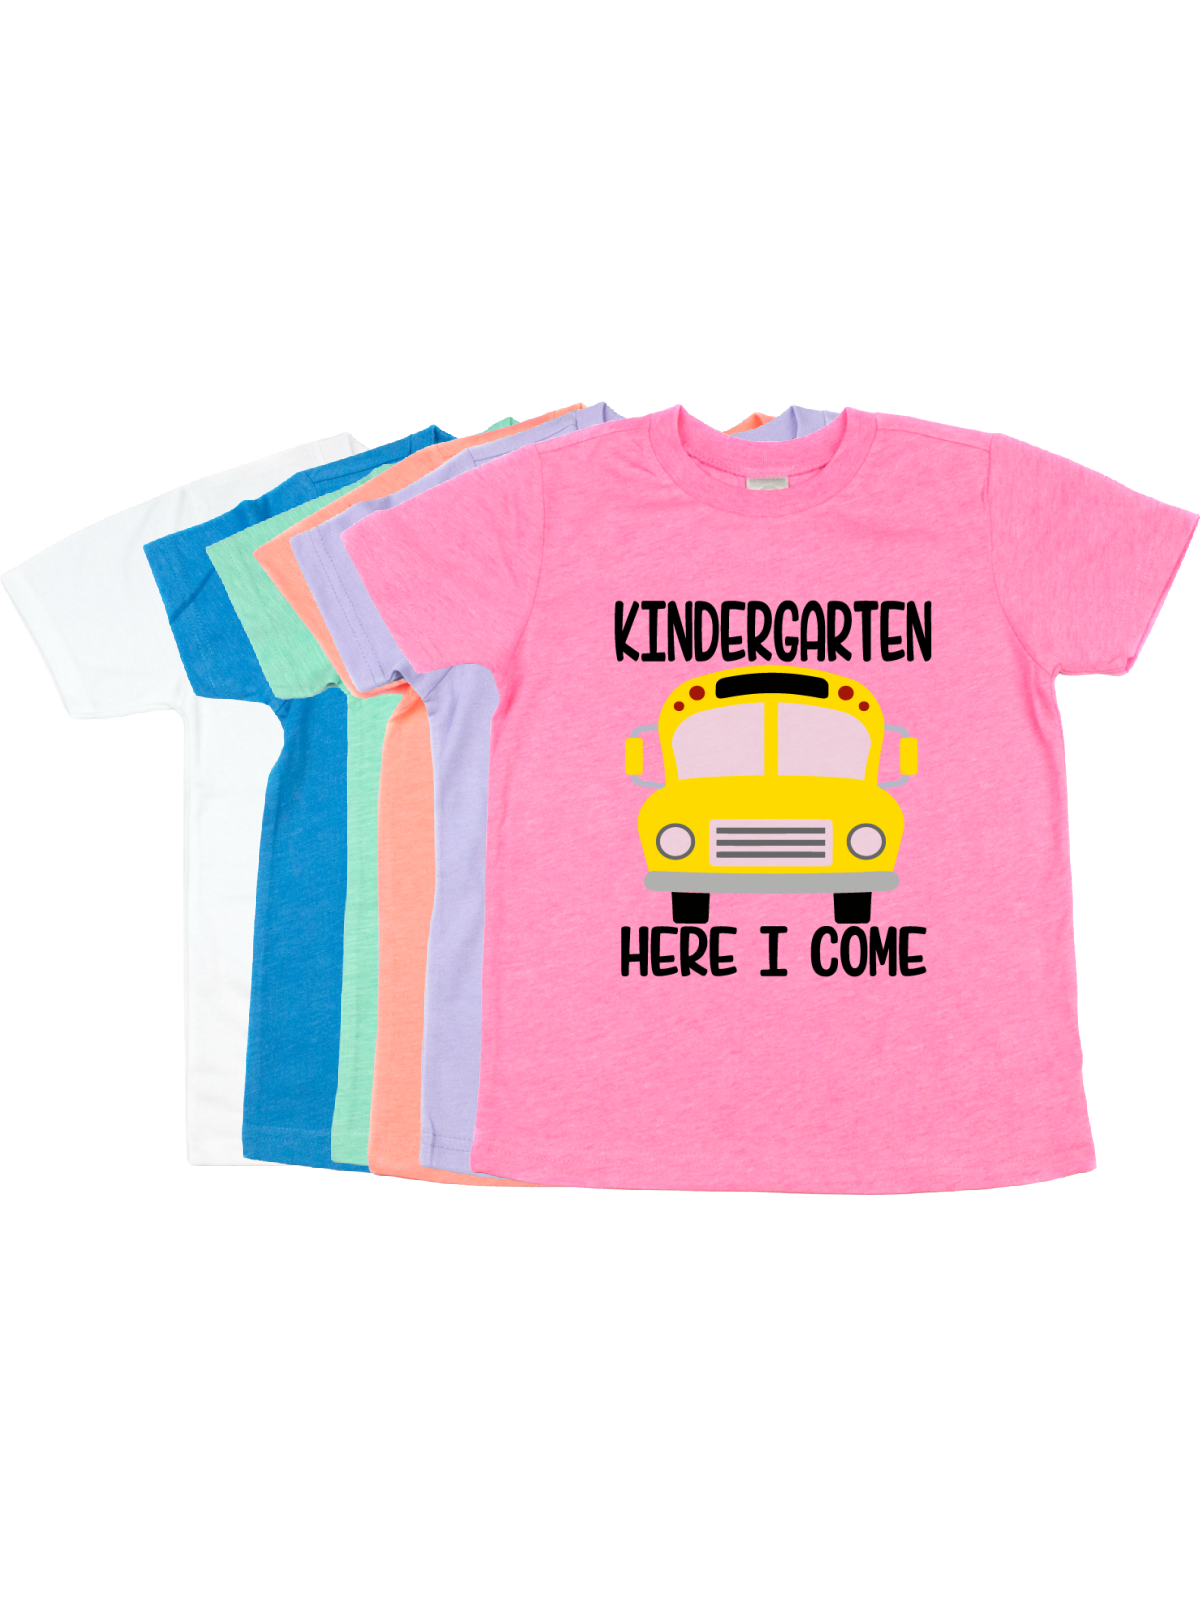 Kindergarten Here I Come Kids Back to School Shirt